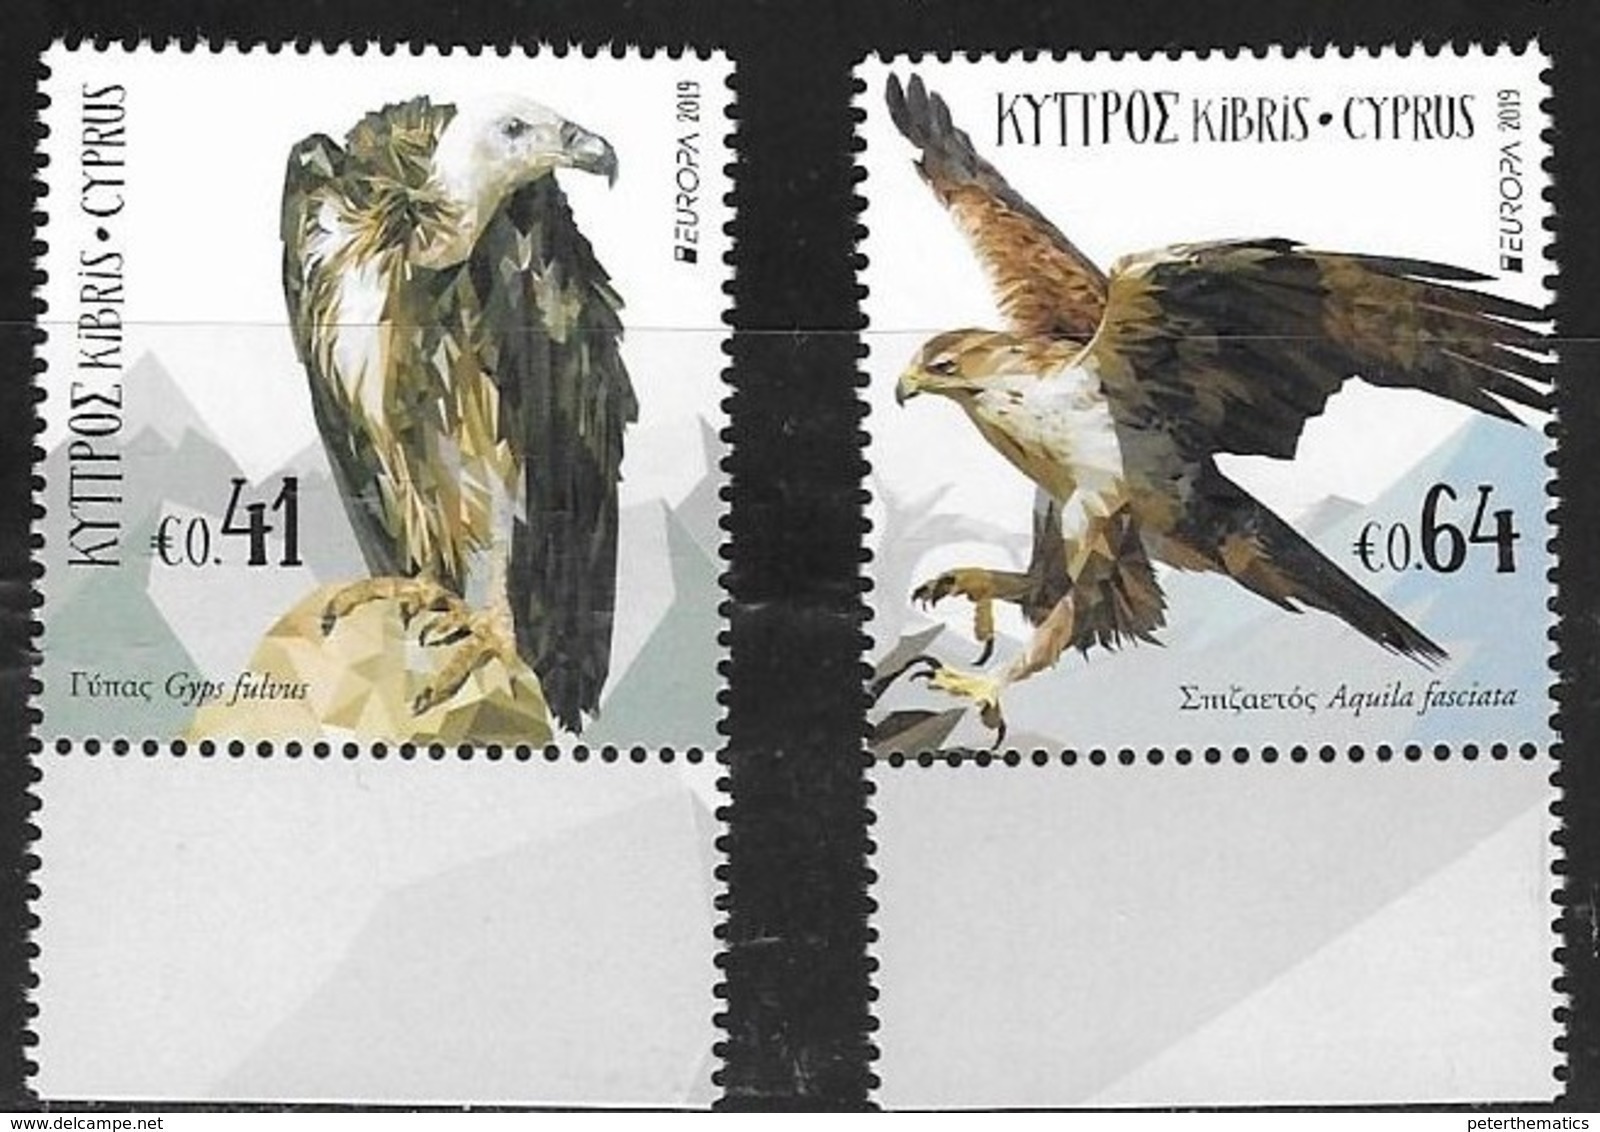 CYPRUS, 2019, MNH, EUROPA, BIRDS, BIRDS OF PREY,2v - 2019